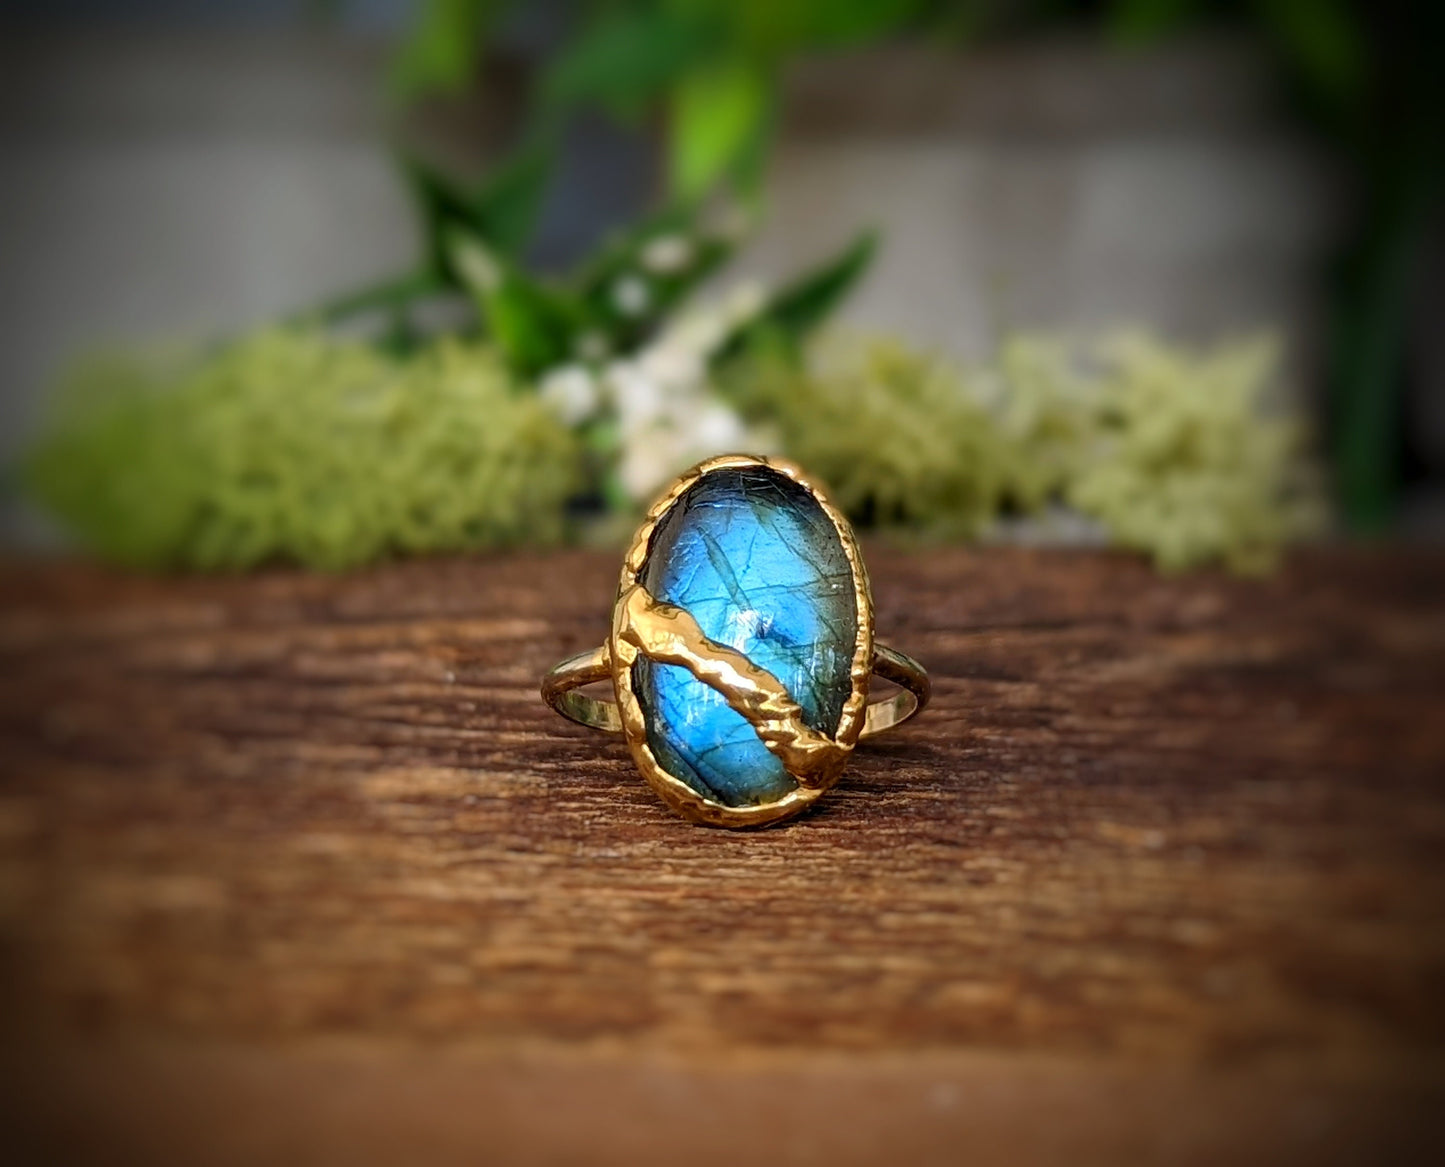 Natural Labradorite ring in unique Kintsugi style 18k Gold setting